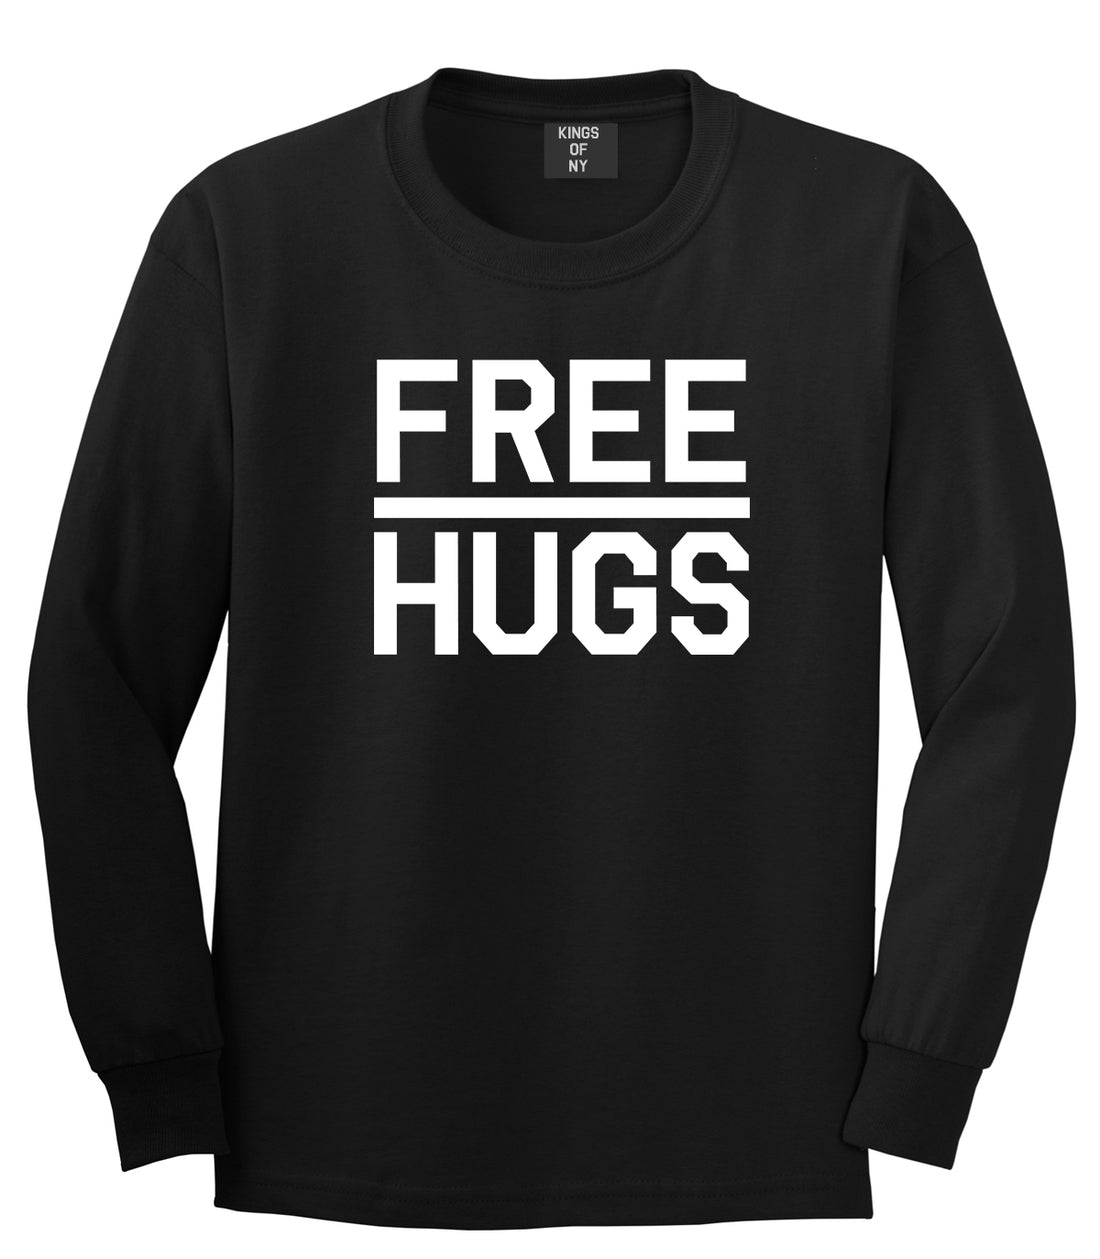 Free Hugs Funny Mens Black Long Sleeve T-Shirt by KINGS OF NY